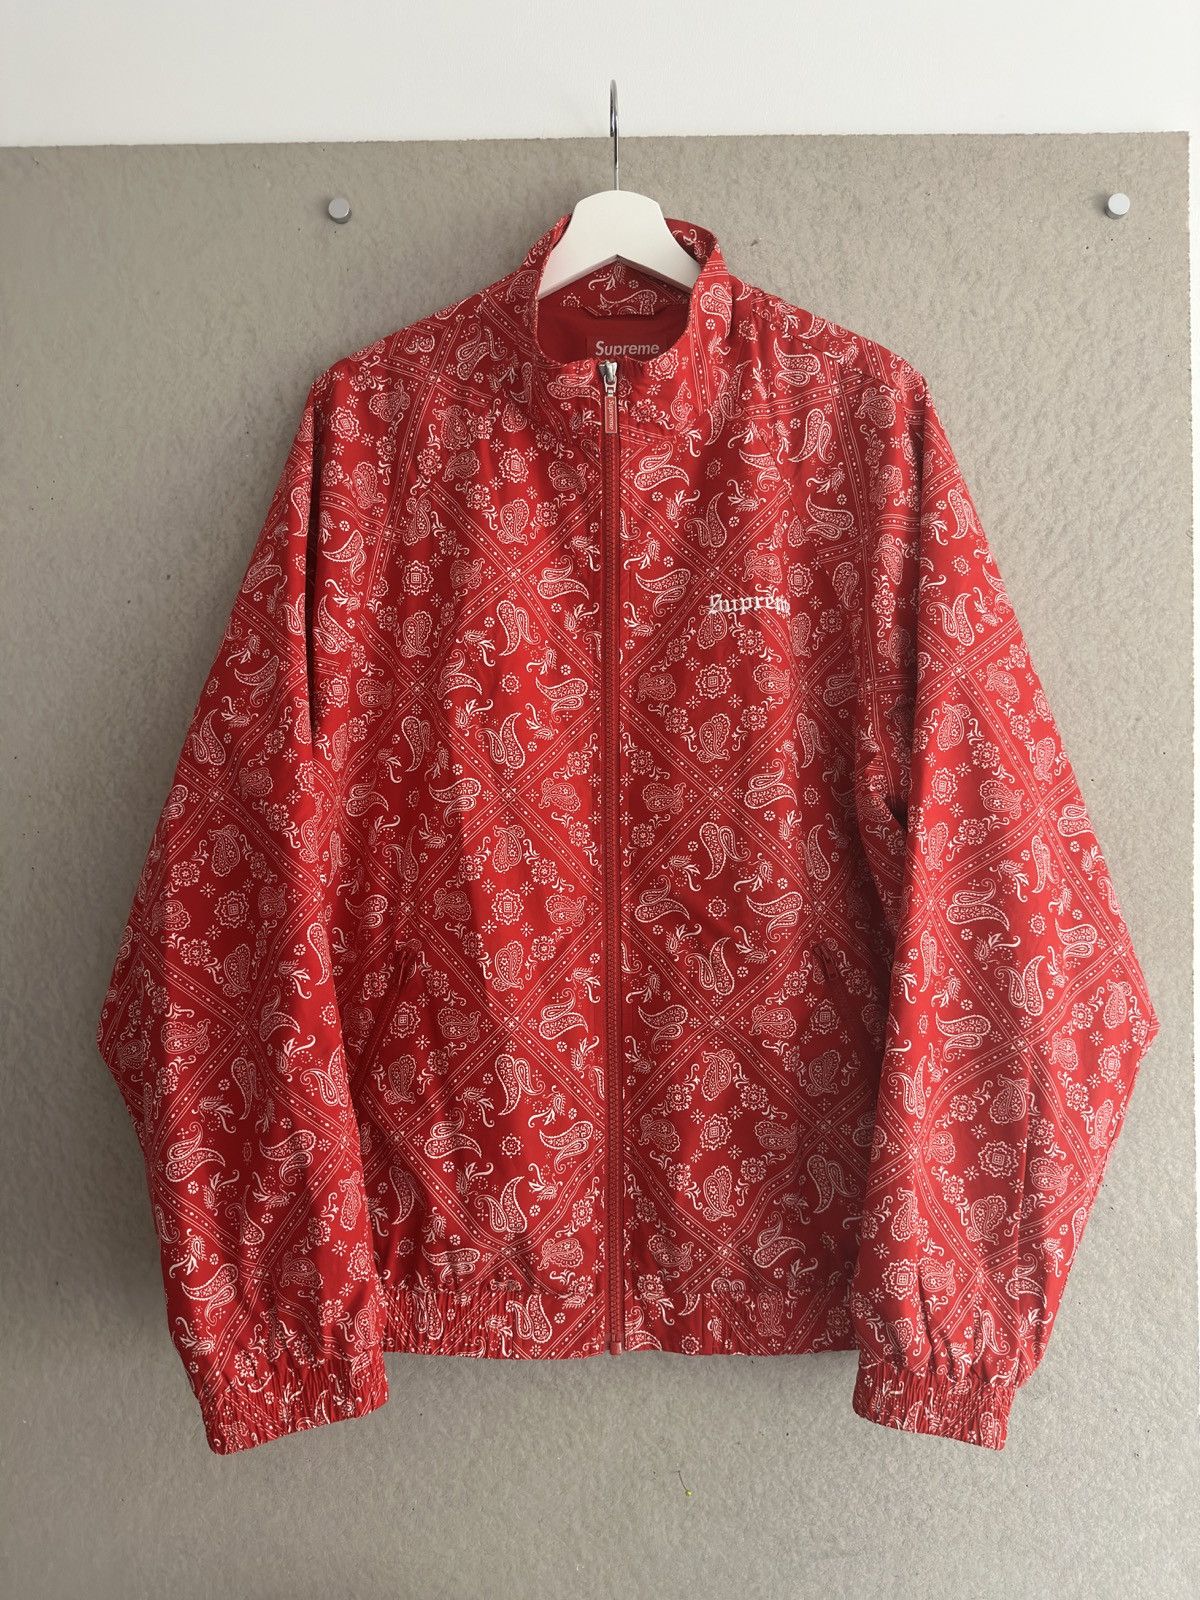 Supreme Supreme red Bandana track jacket | Grailed